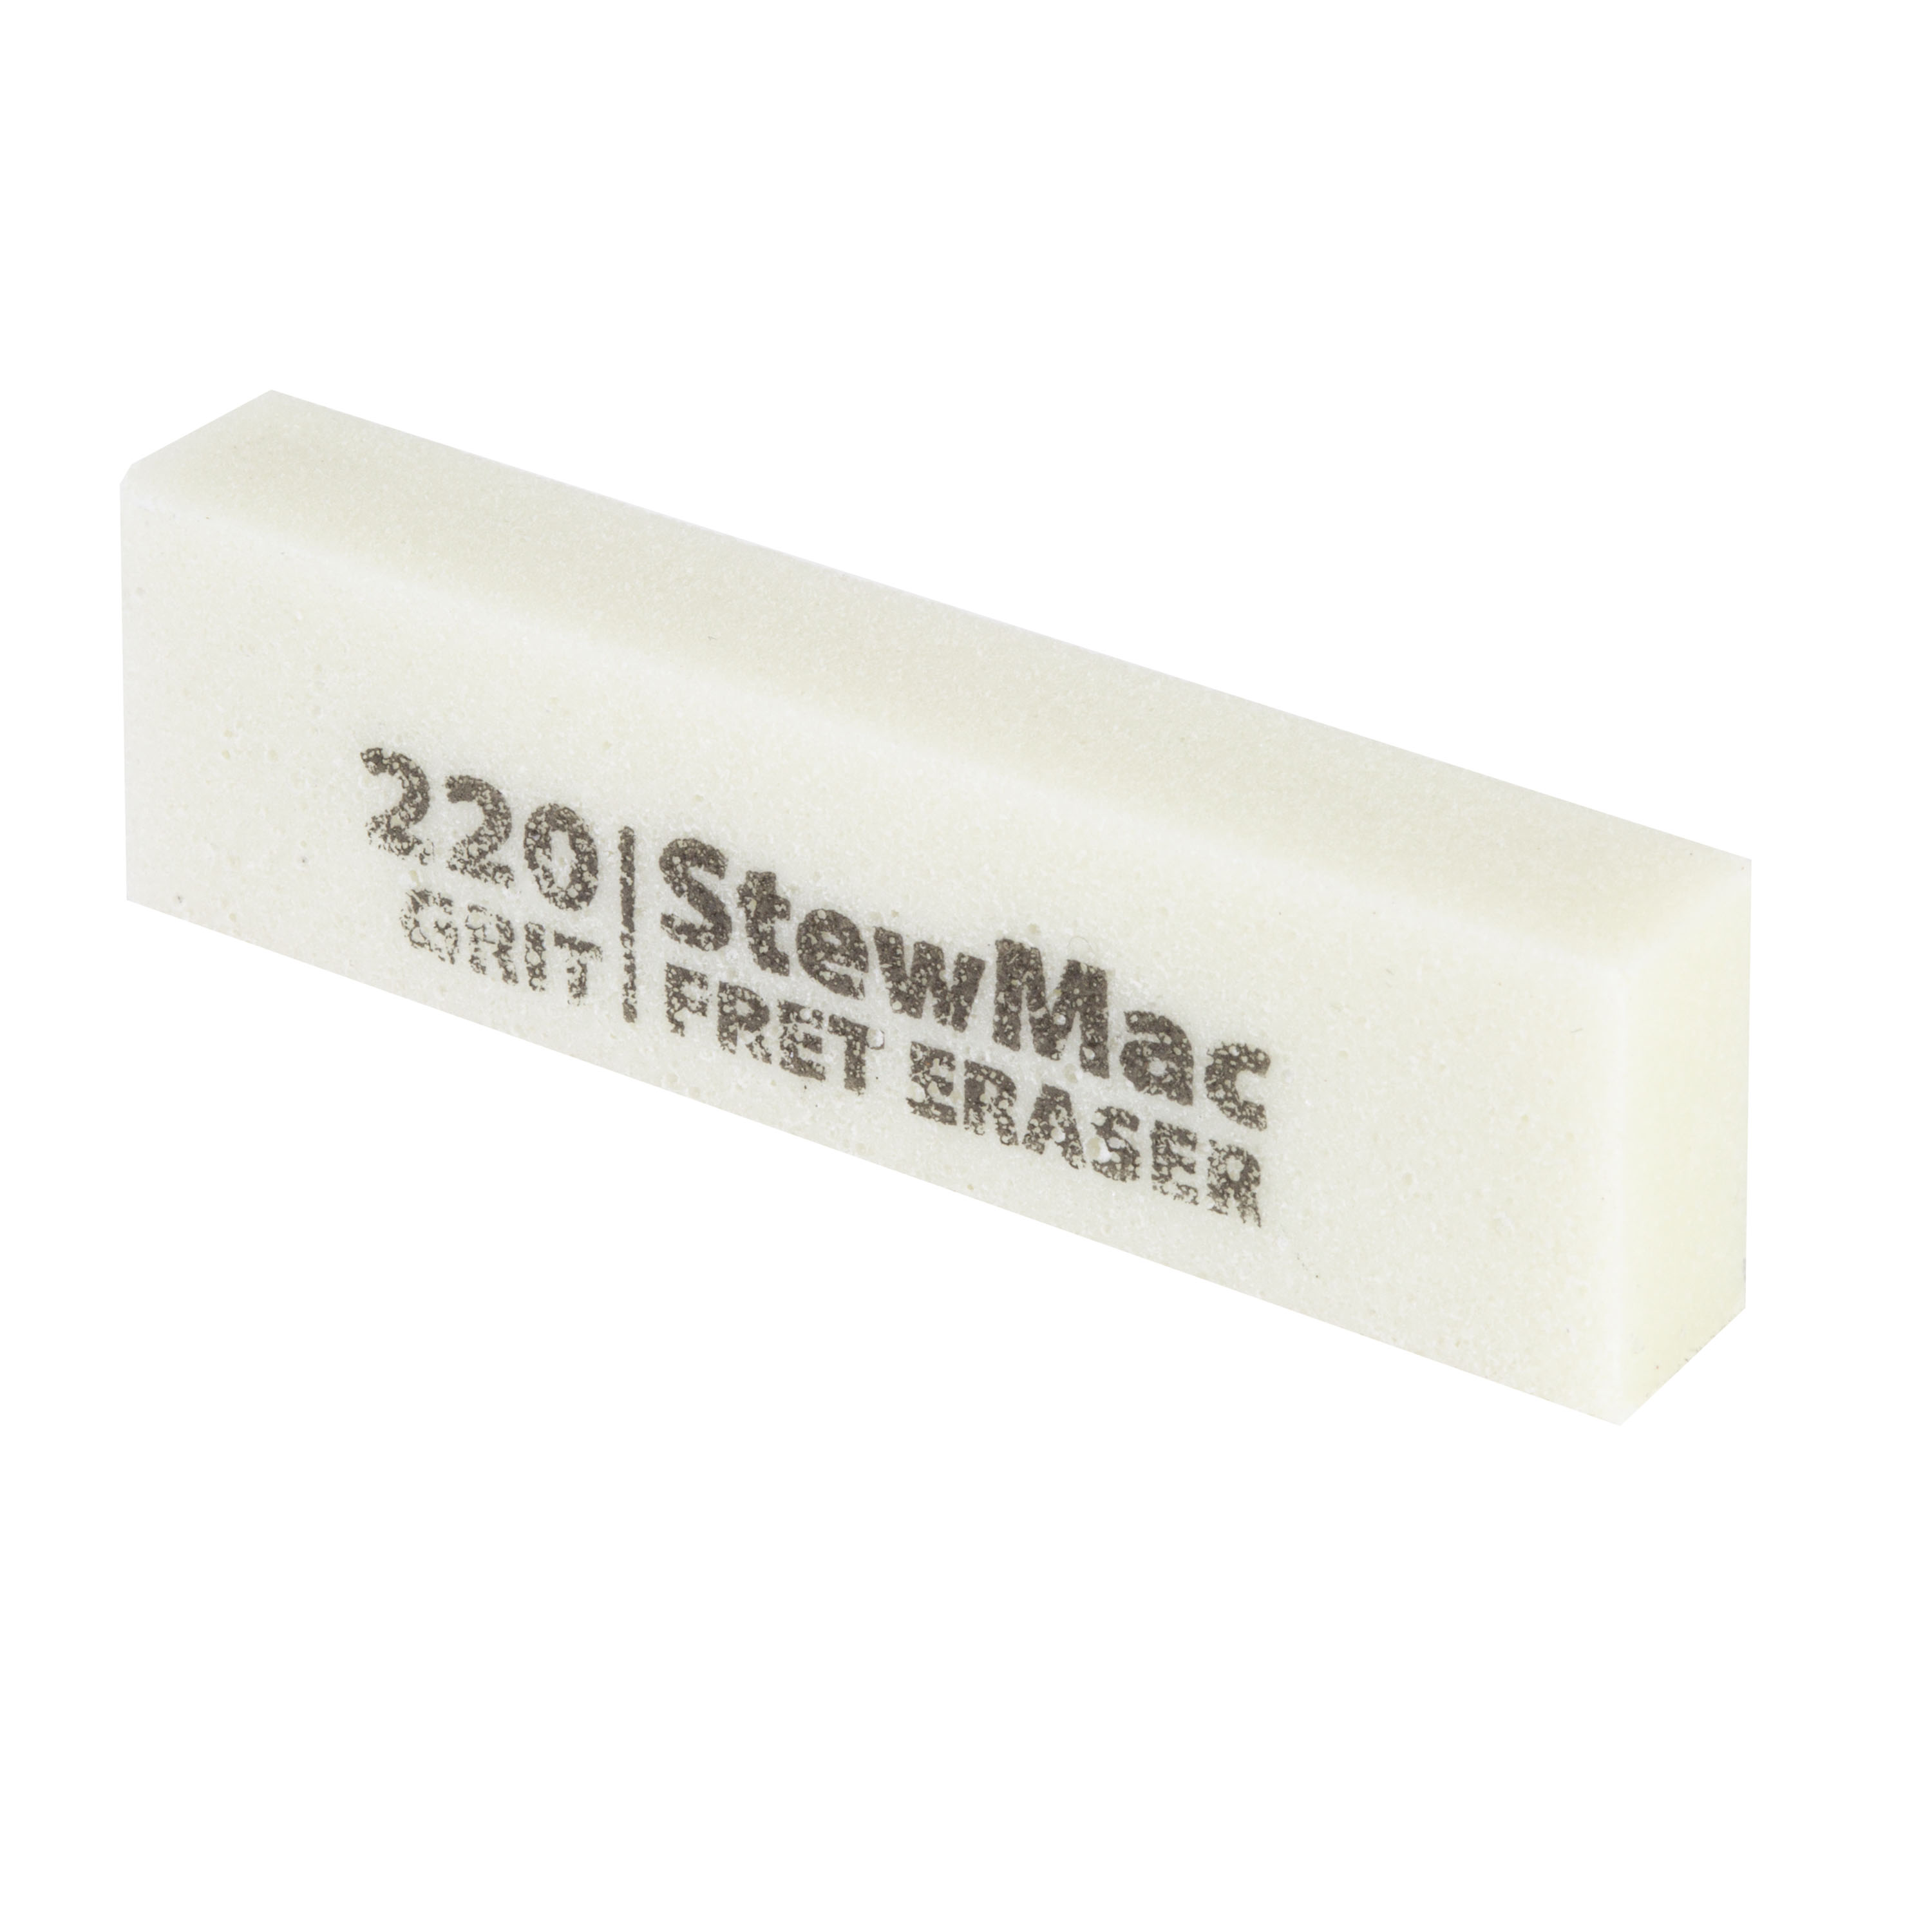 Fret Erasers - StewMac